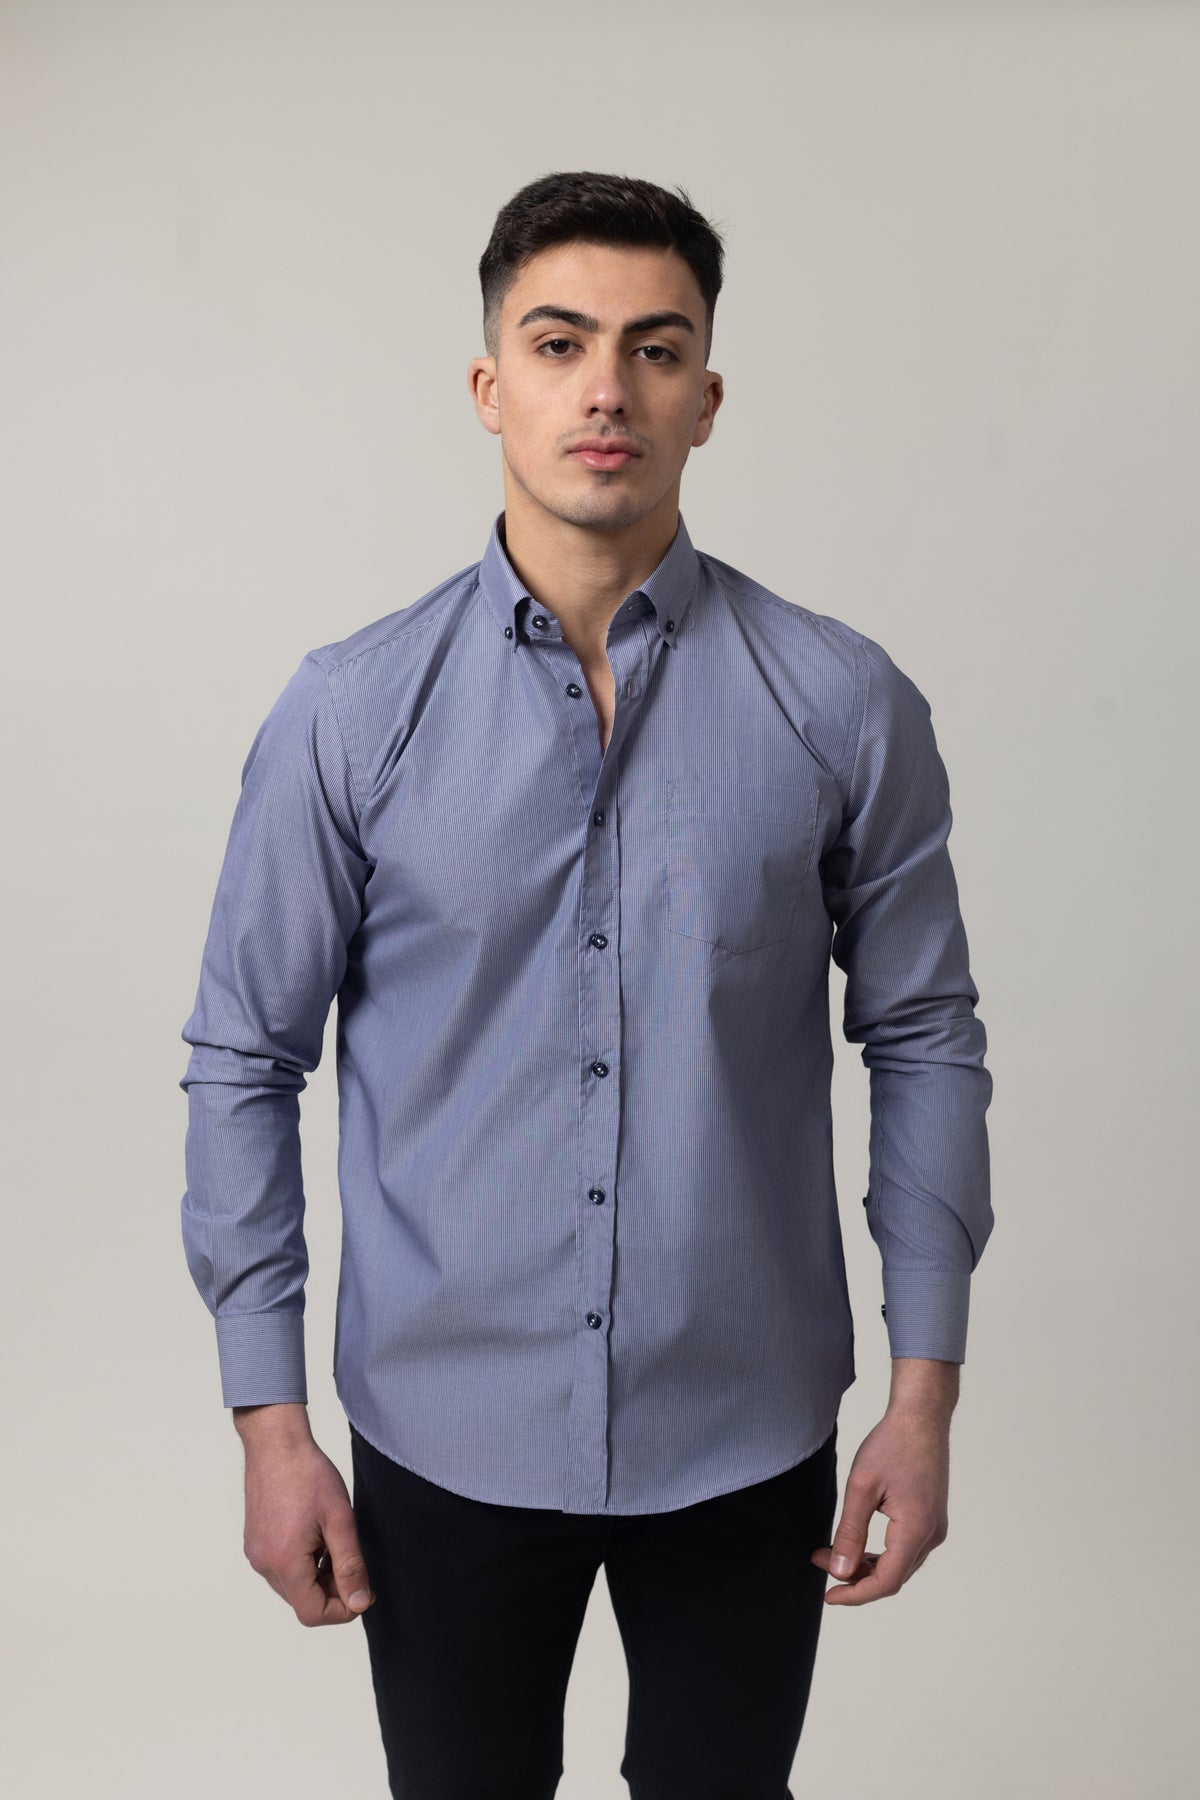 Shirts Long Sleeve - Dark Blue